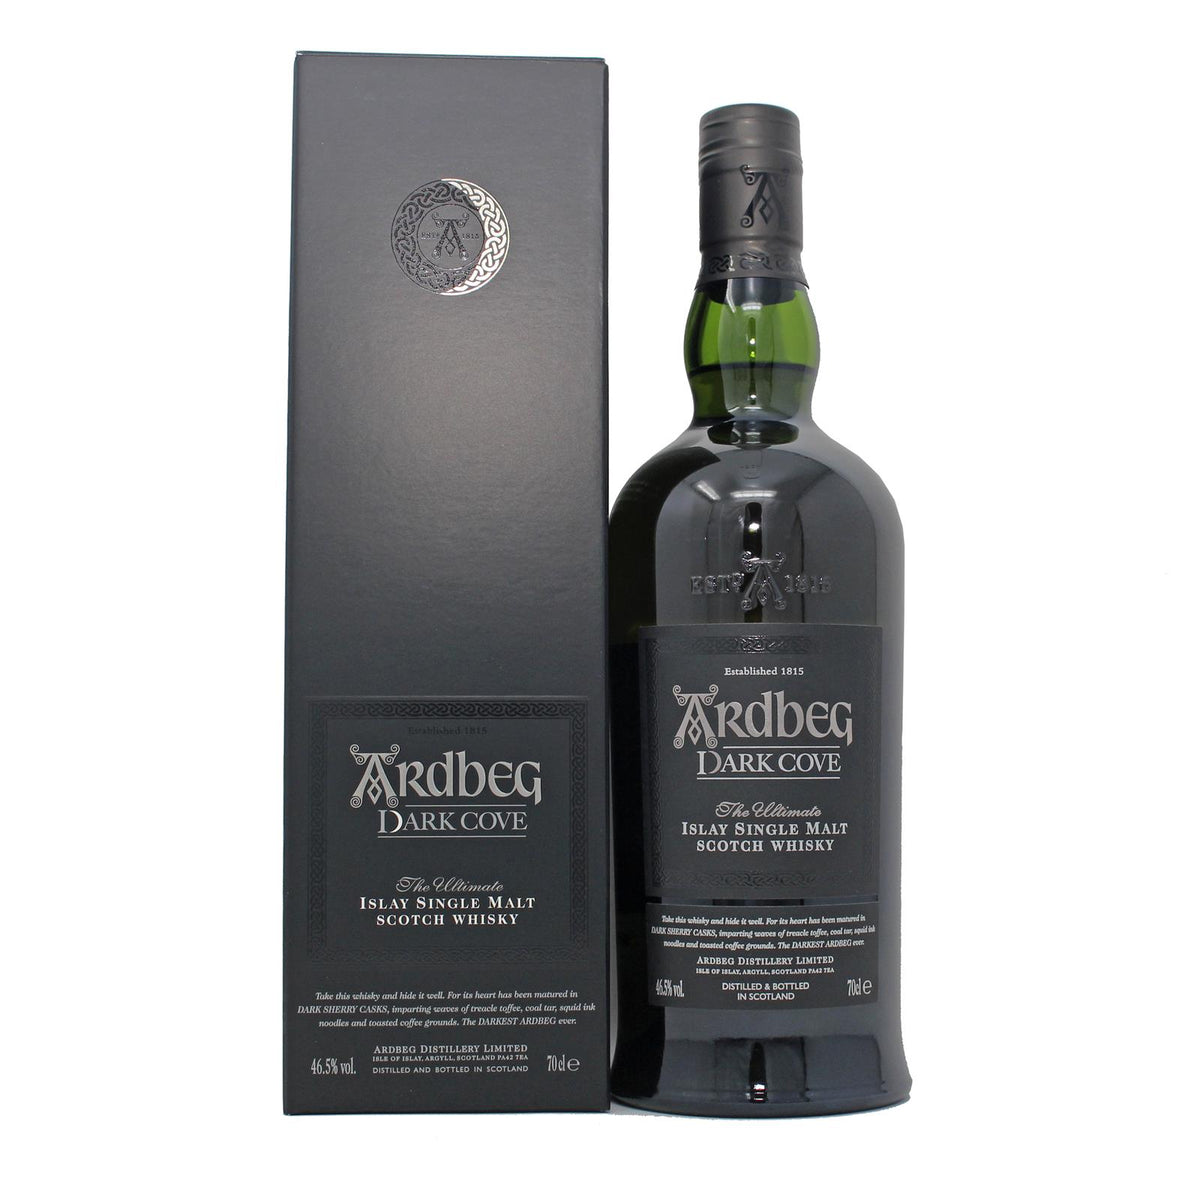 Ardbeg Dark Cove 2016 Islay Single Malt Scotch Whisky 0,7L